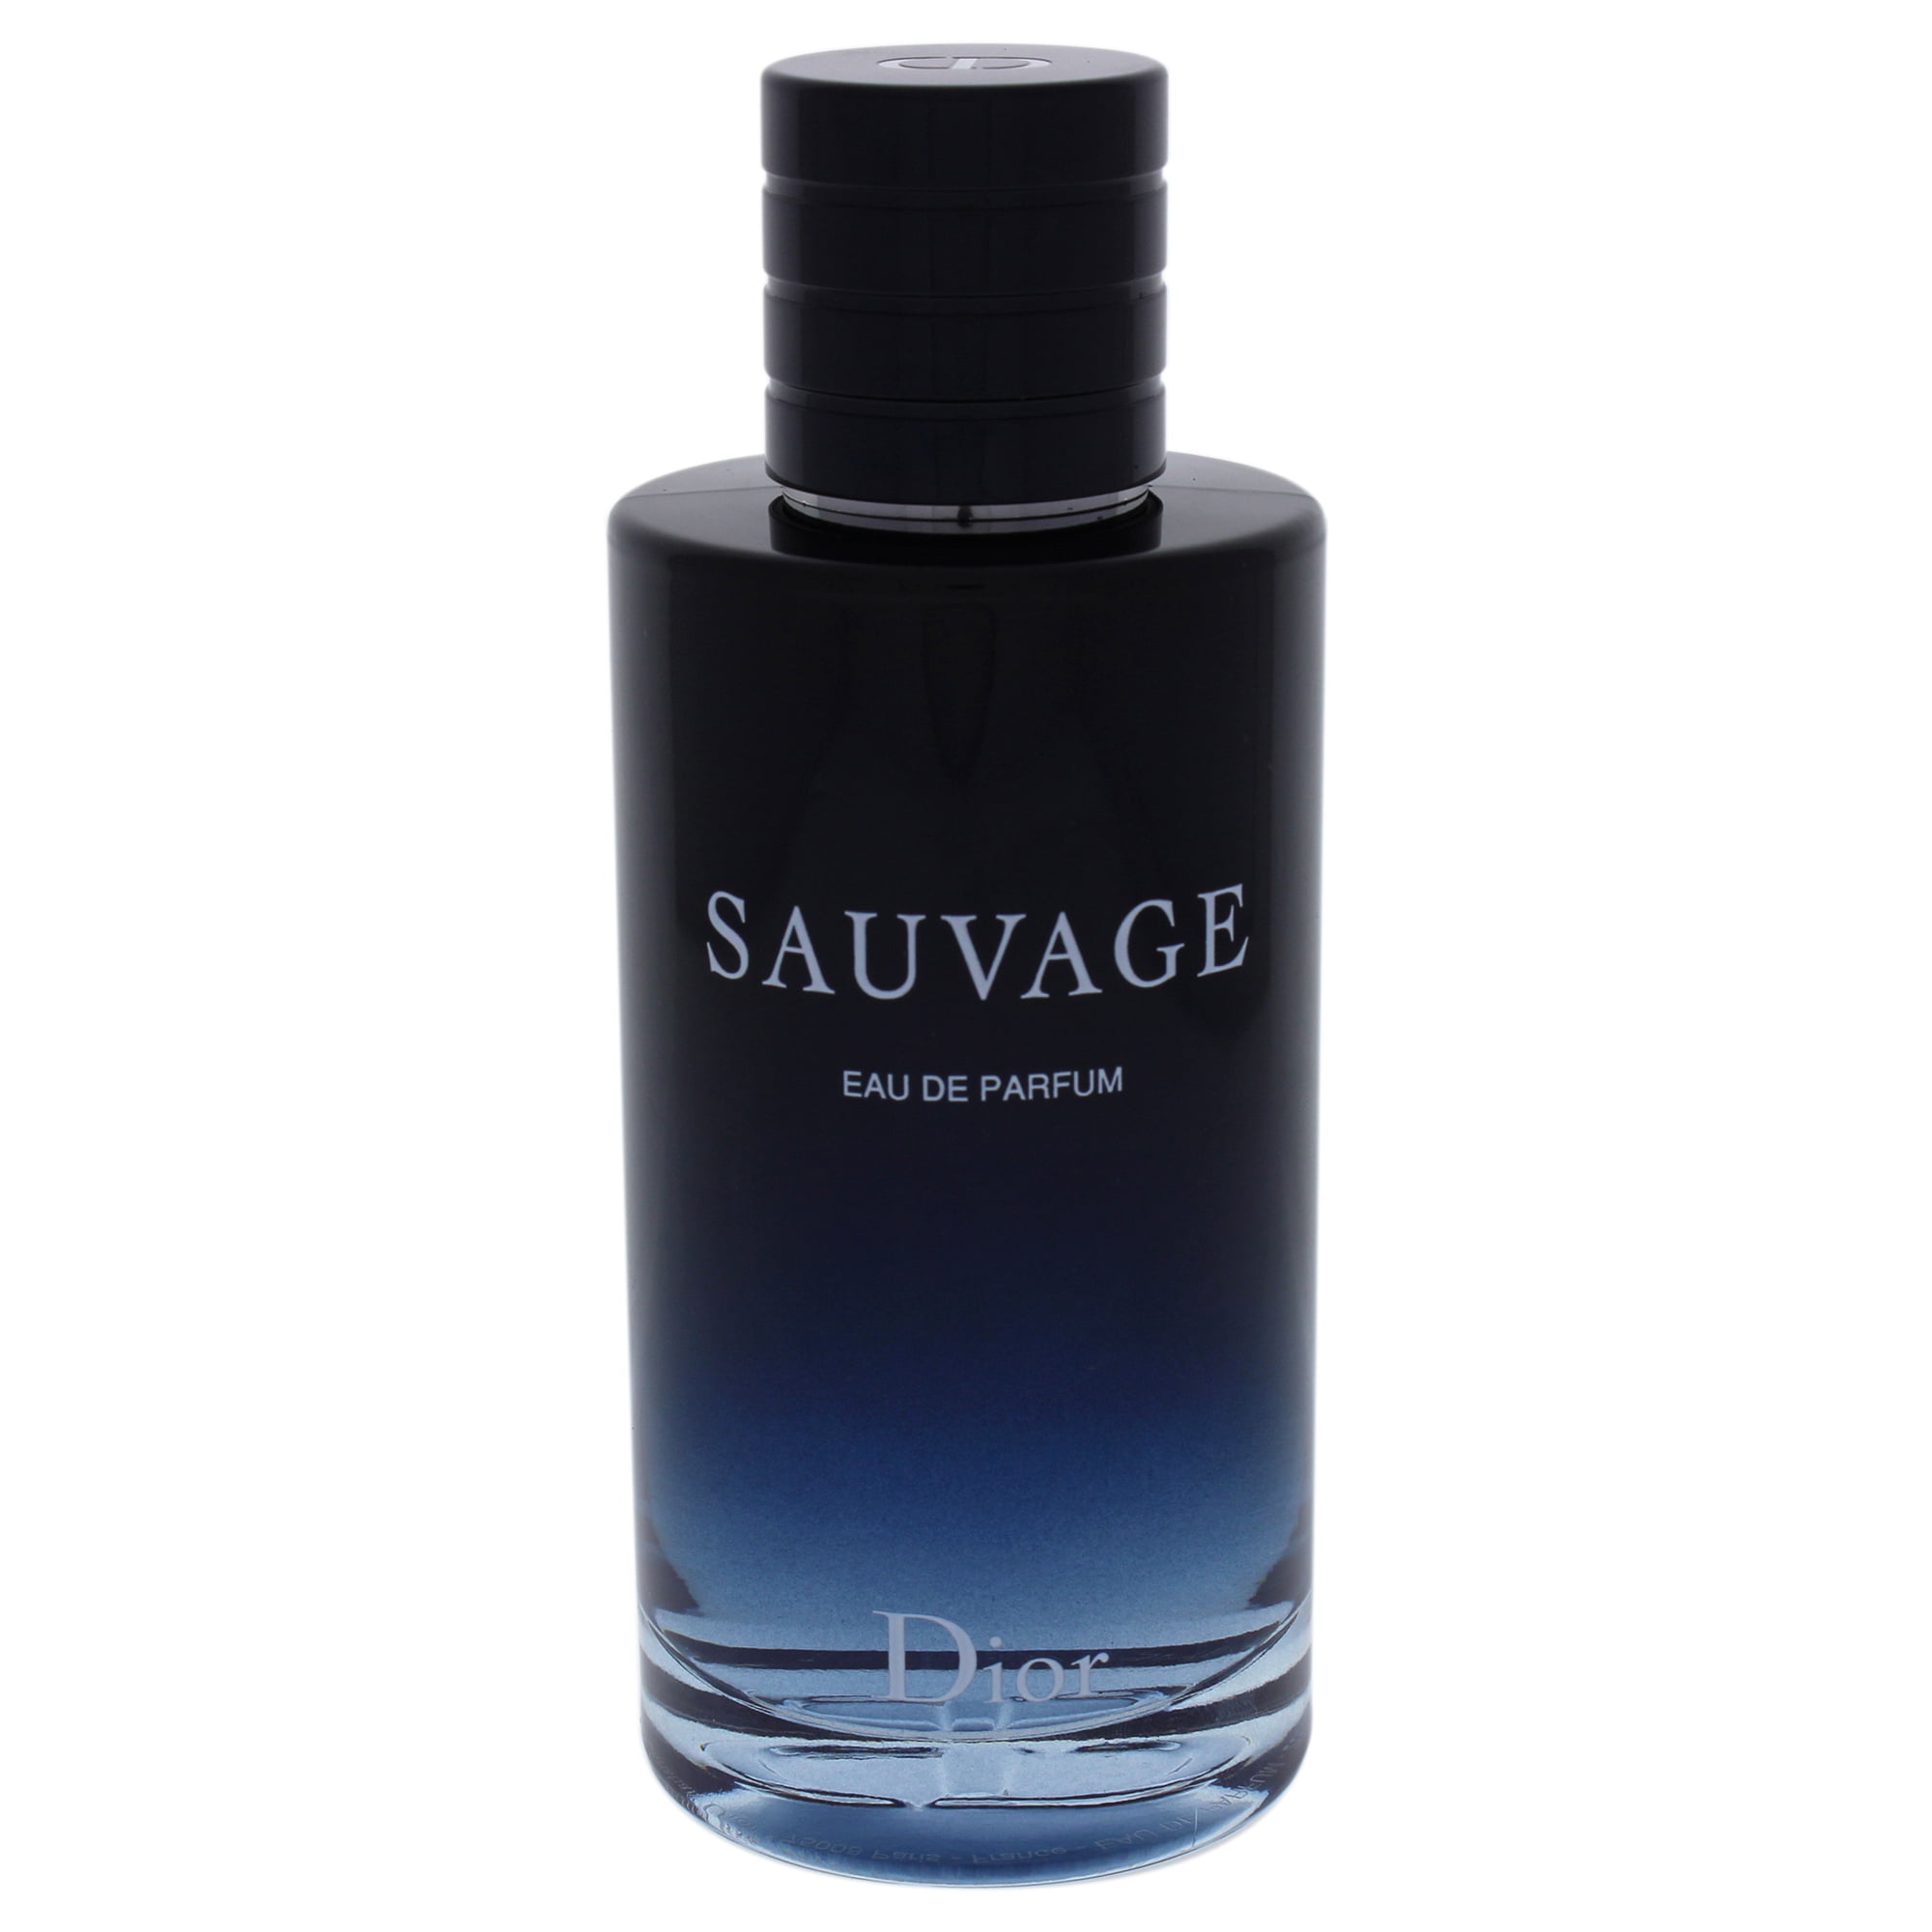 Dior Sauvage Eau de Parfum Cologne for Men, 6.8 Oz - Walmart.com